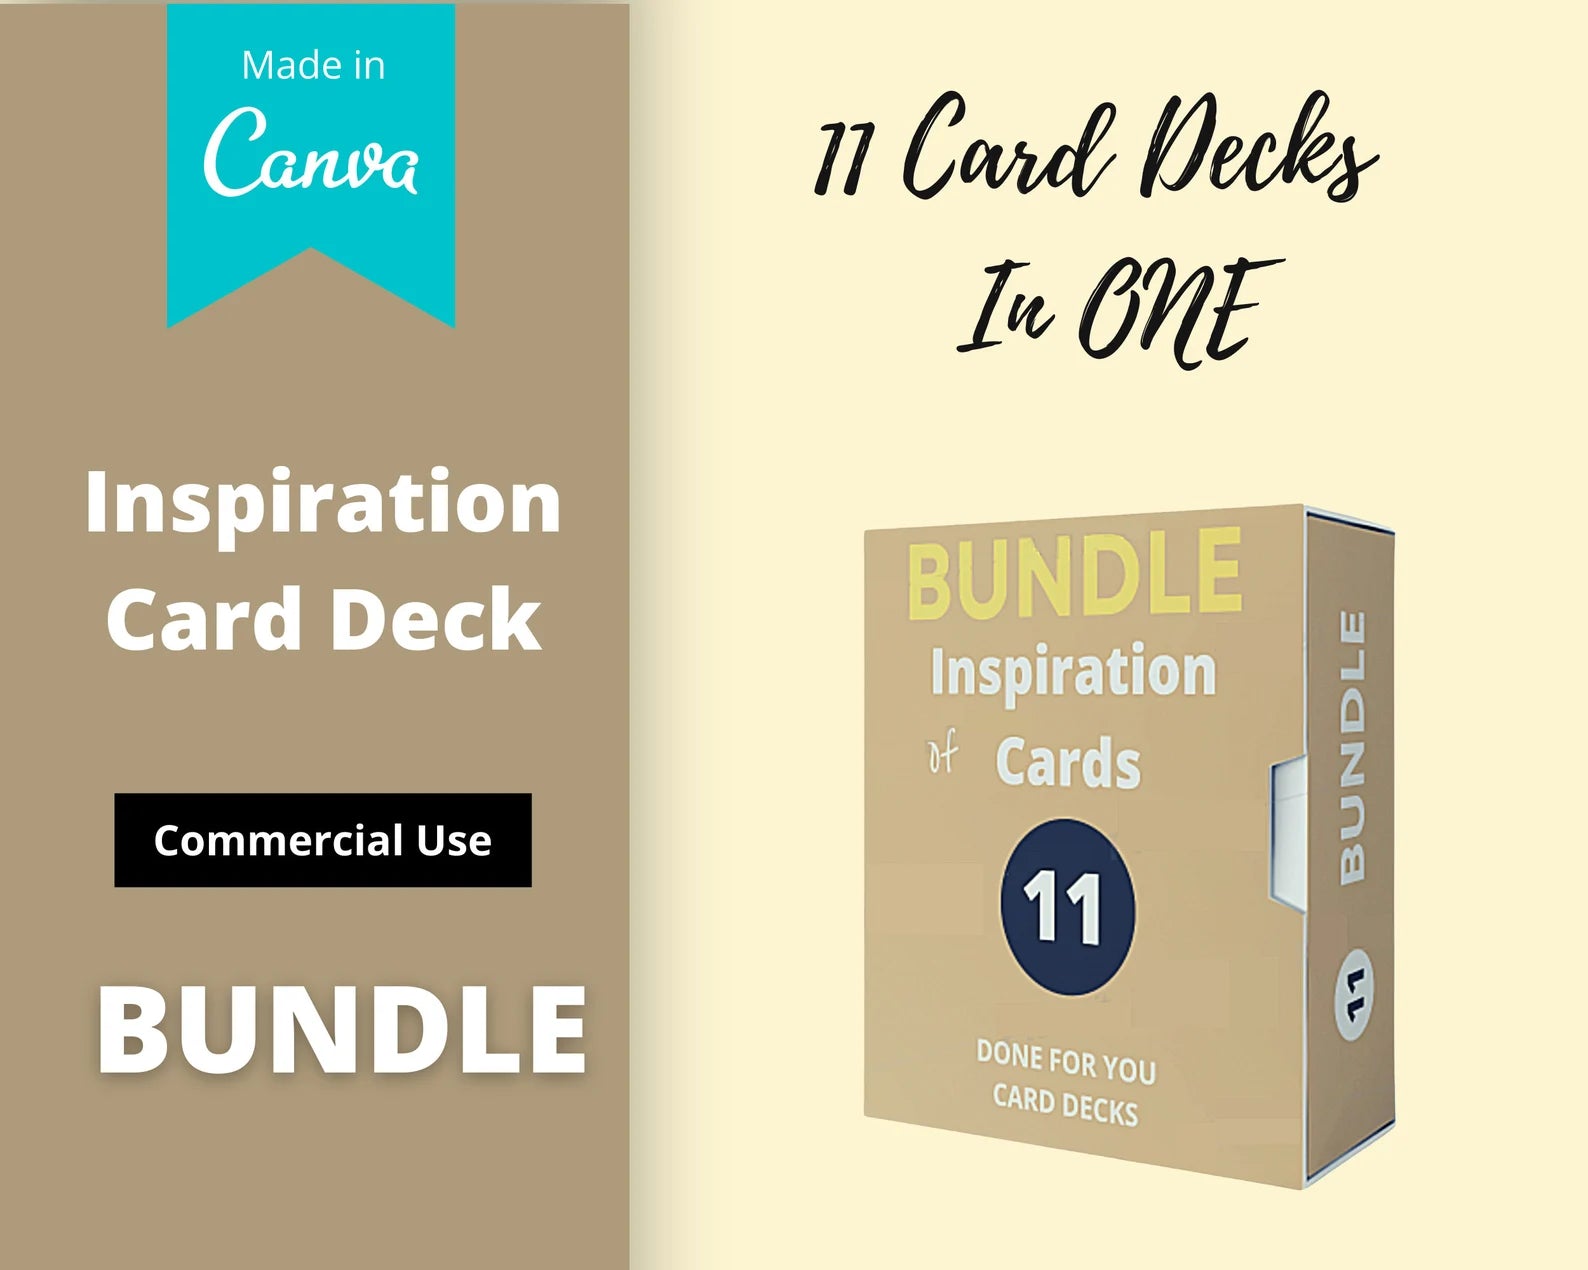 BUNDLE of 11 Inspiration Cards Decks in Canva | Exploration Question Card Decks | Commercial Use